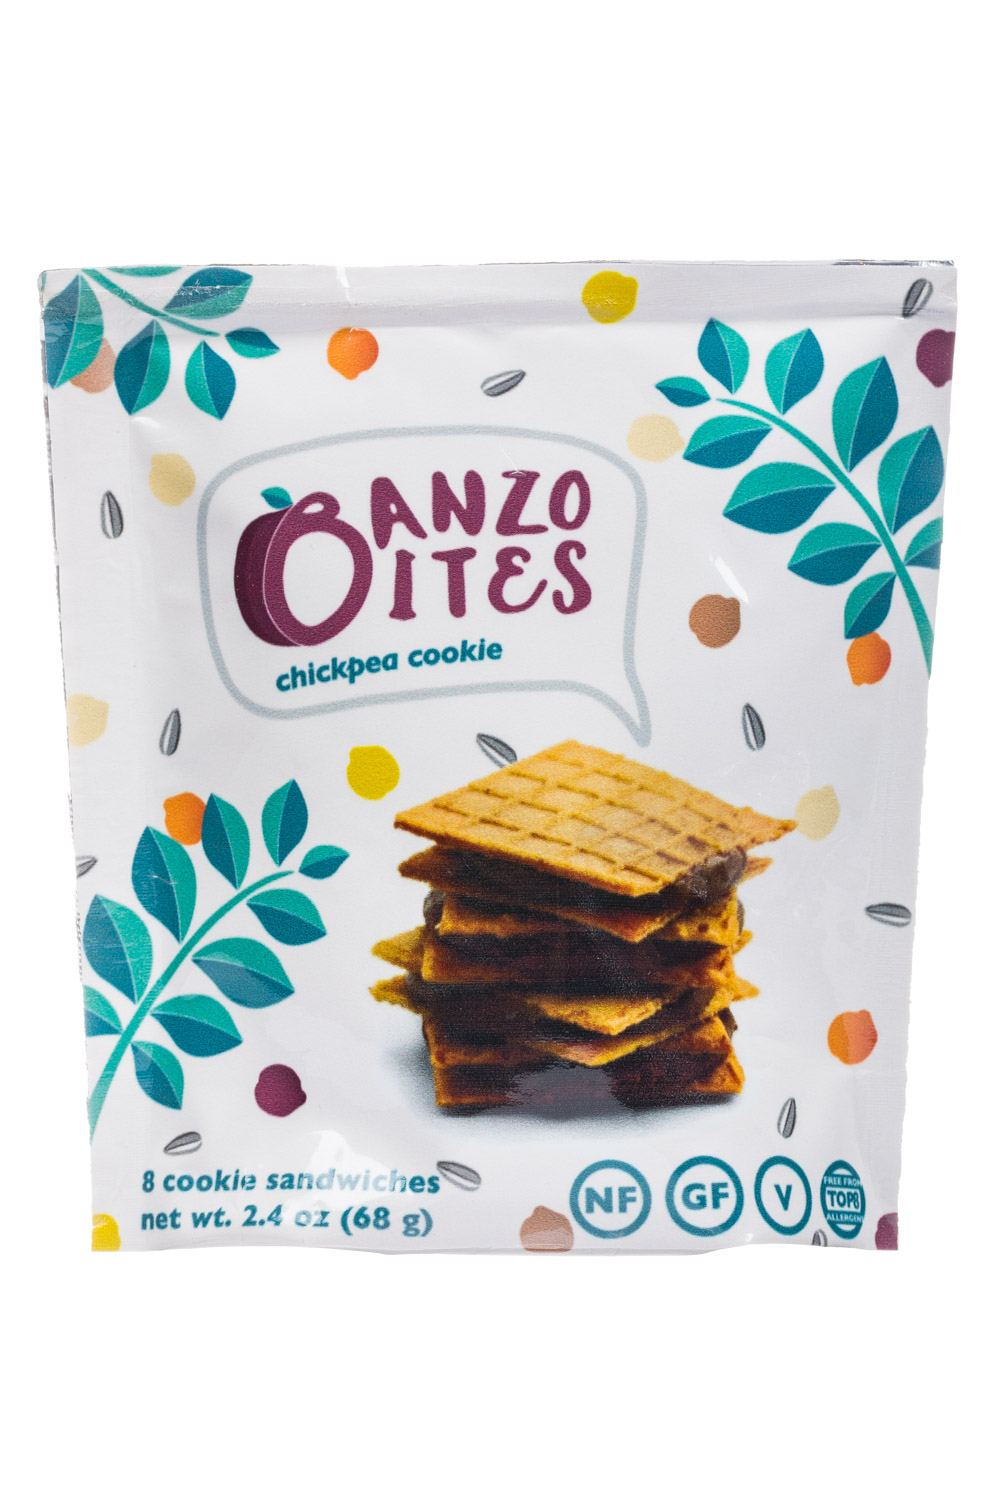 Banzo Bites - Chickpea Cookie